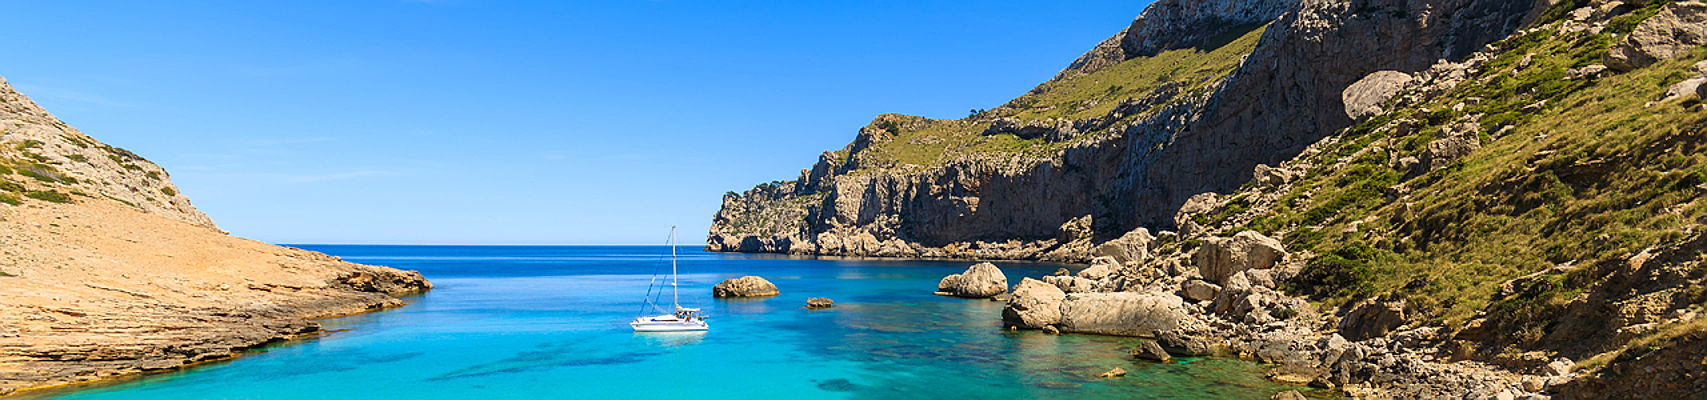  Pollensa
- Beautiful small beaches in North Majorca